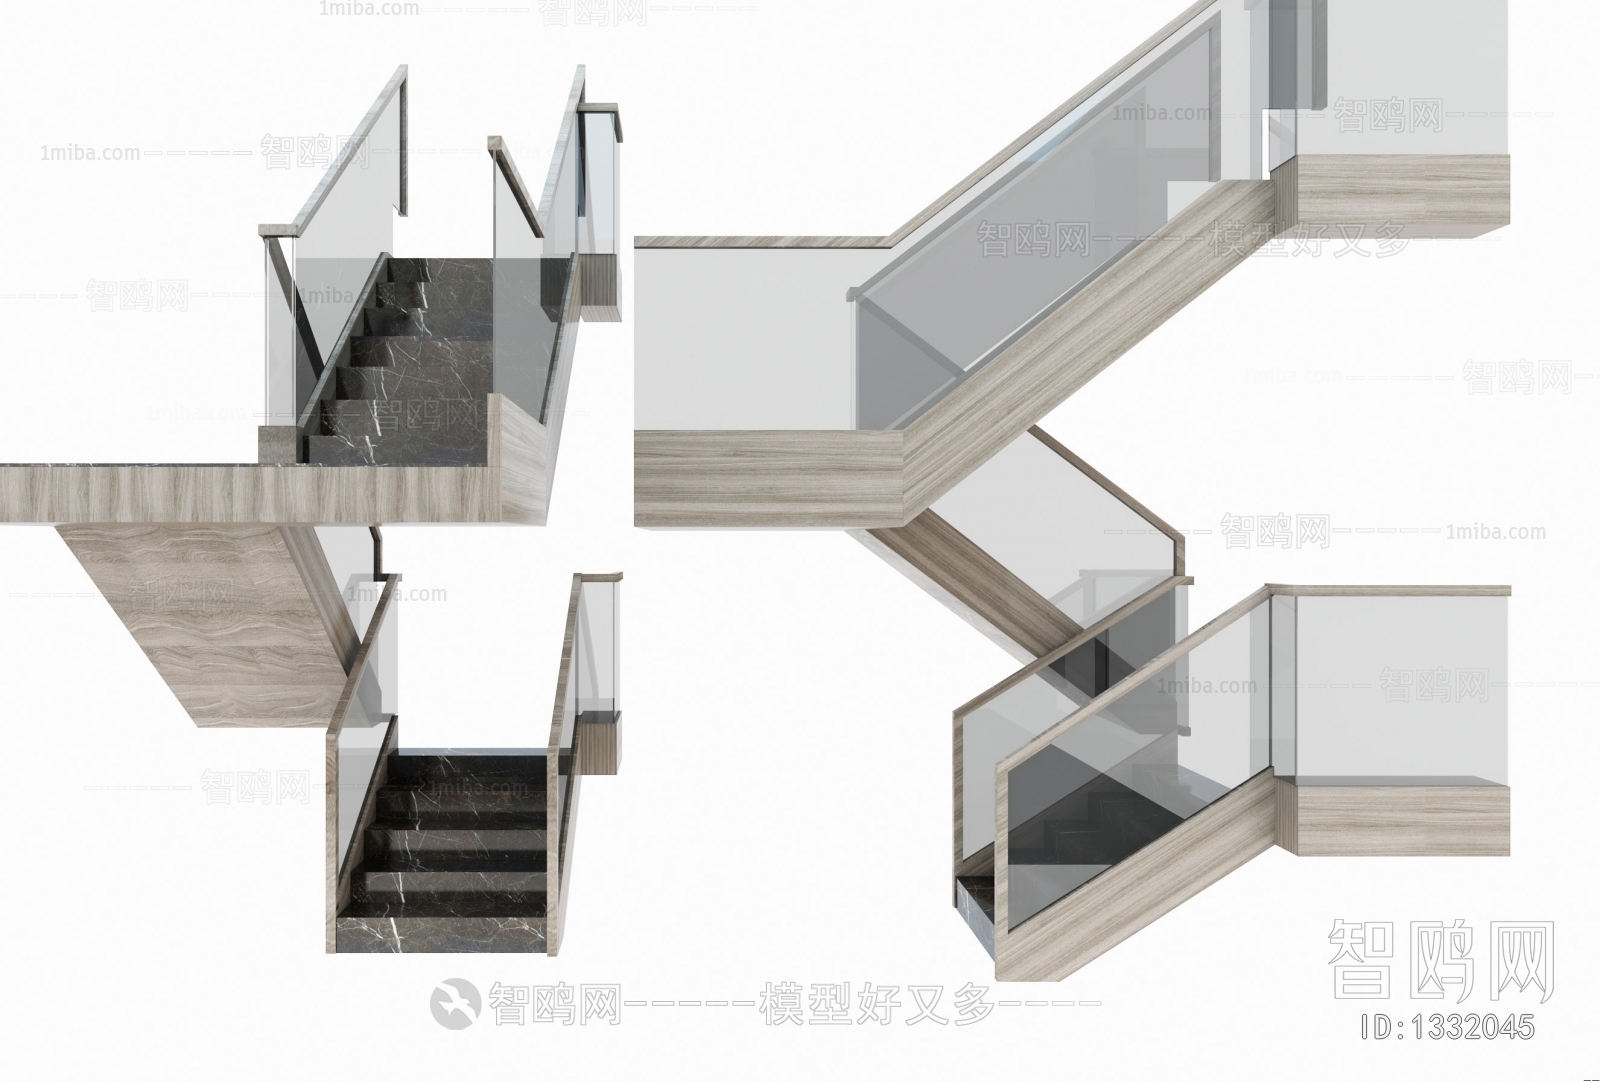 New Chinese Style Escalator